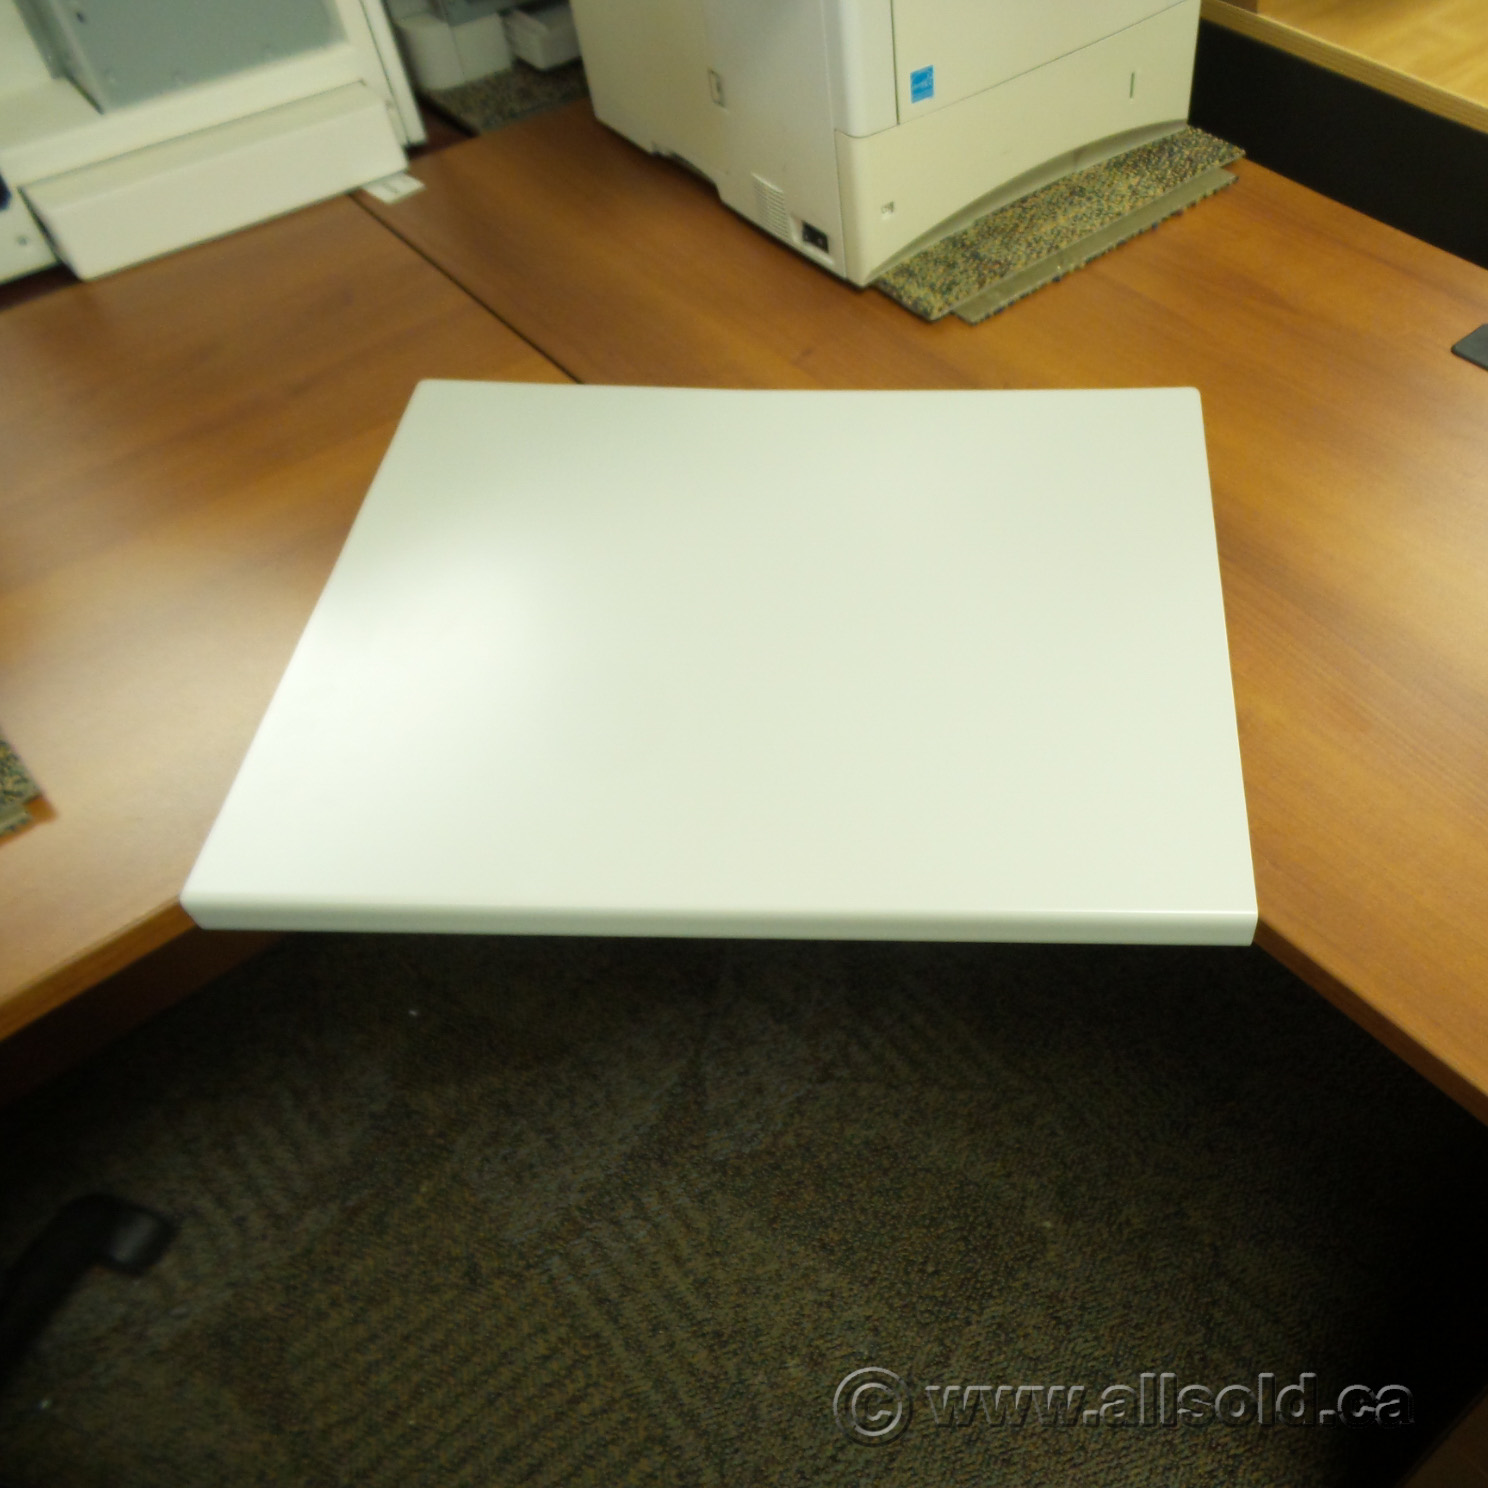 White Metal Corner Connector Sleeve Desk Extender Allsold Ca